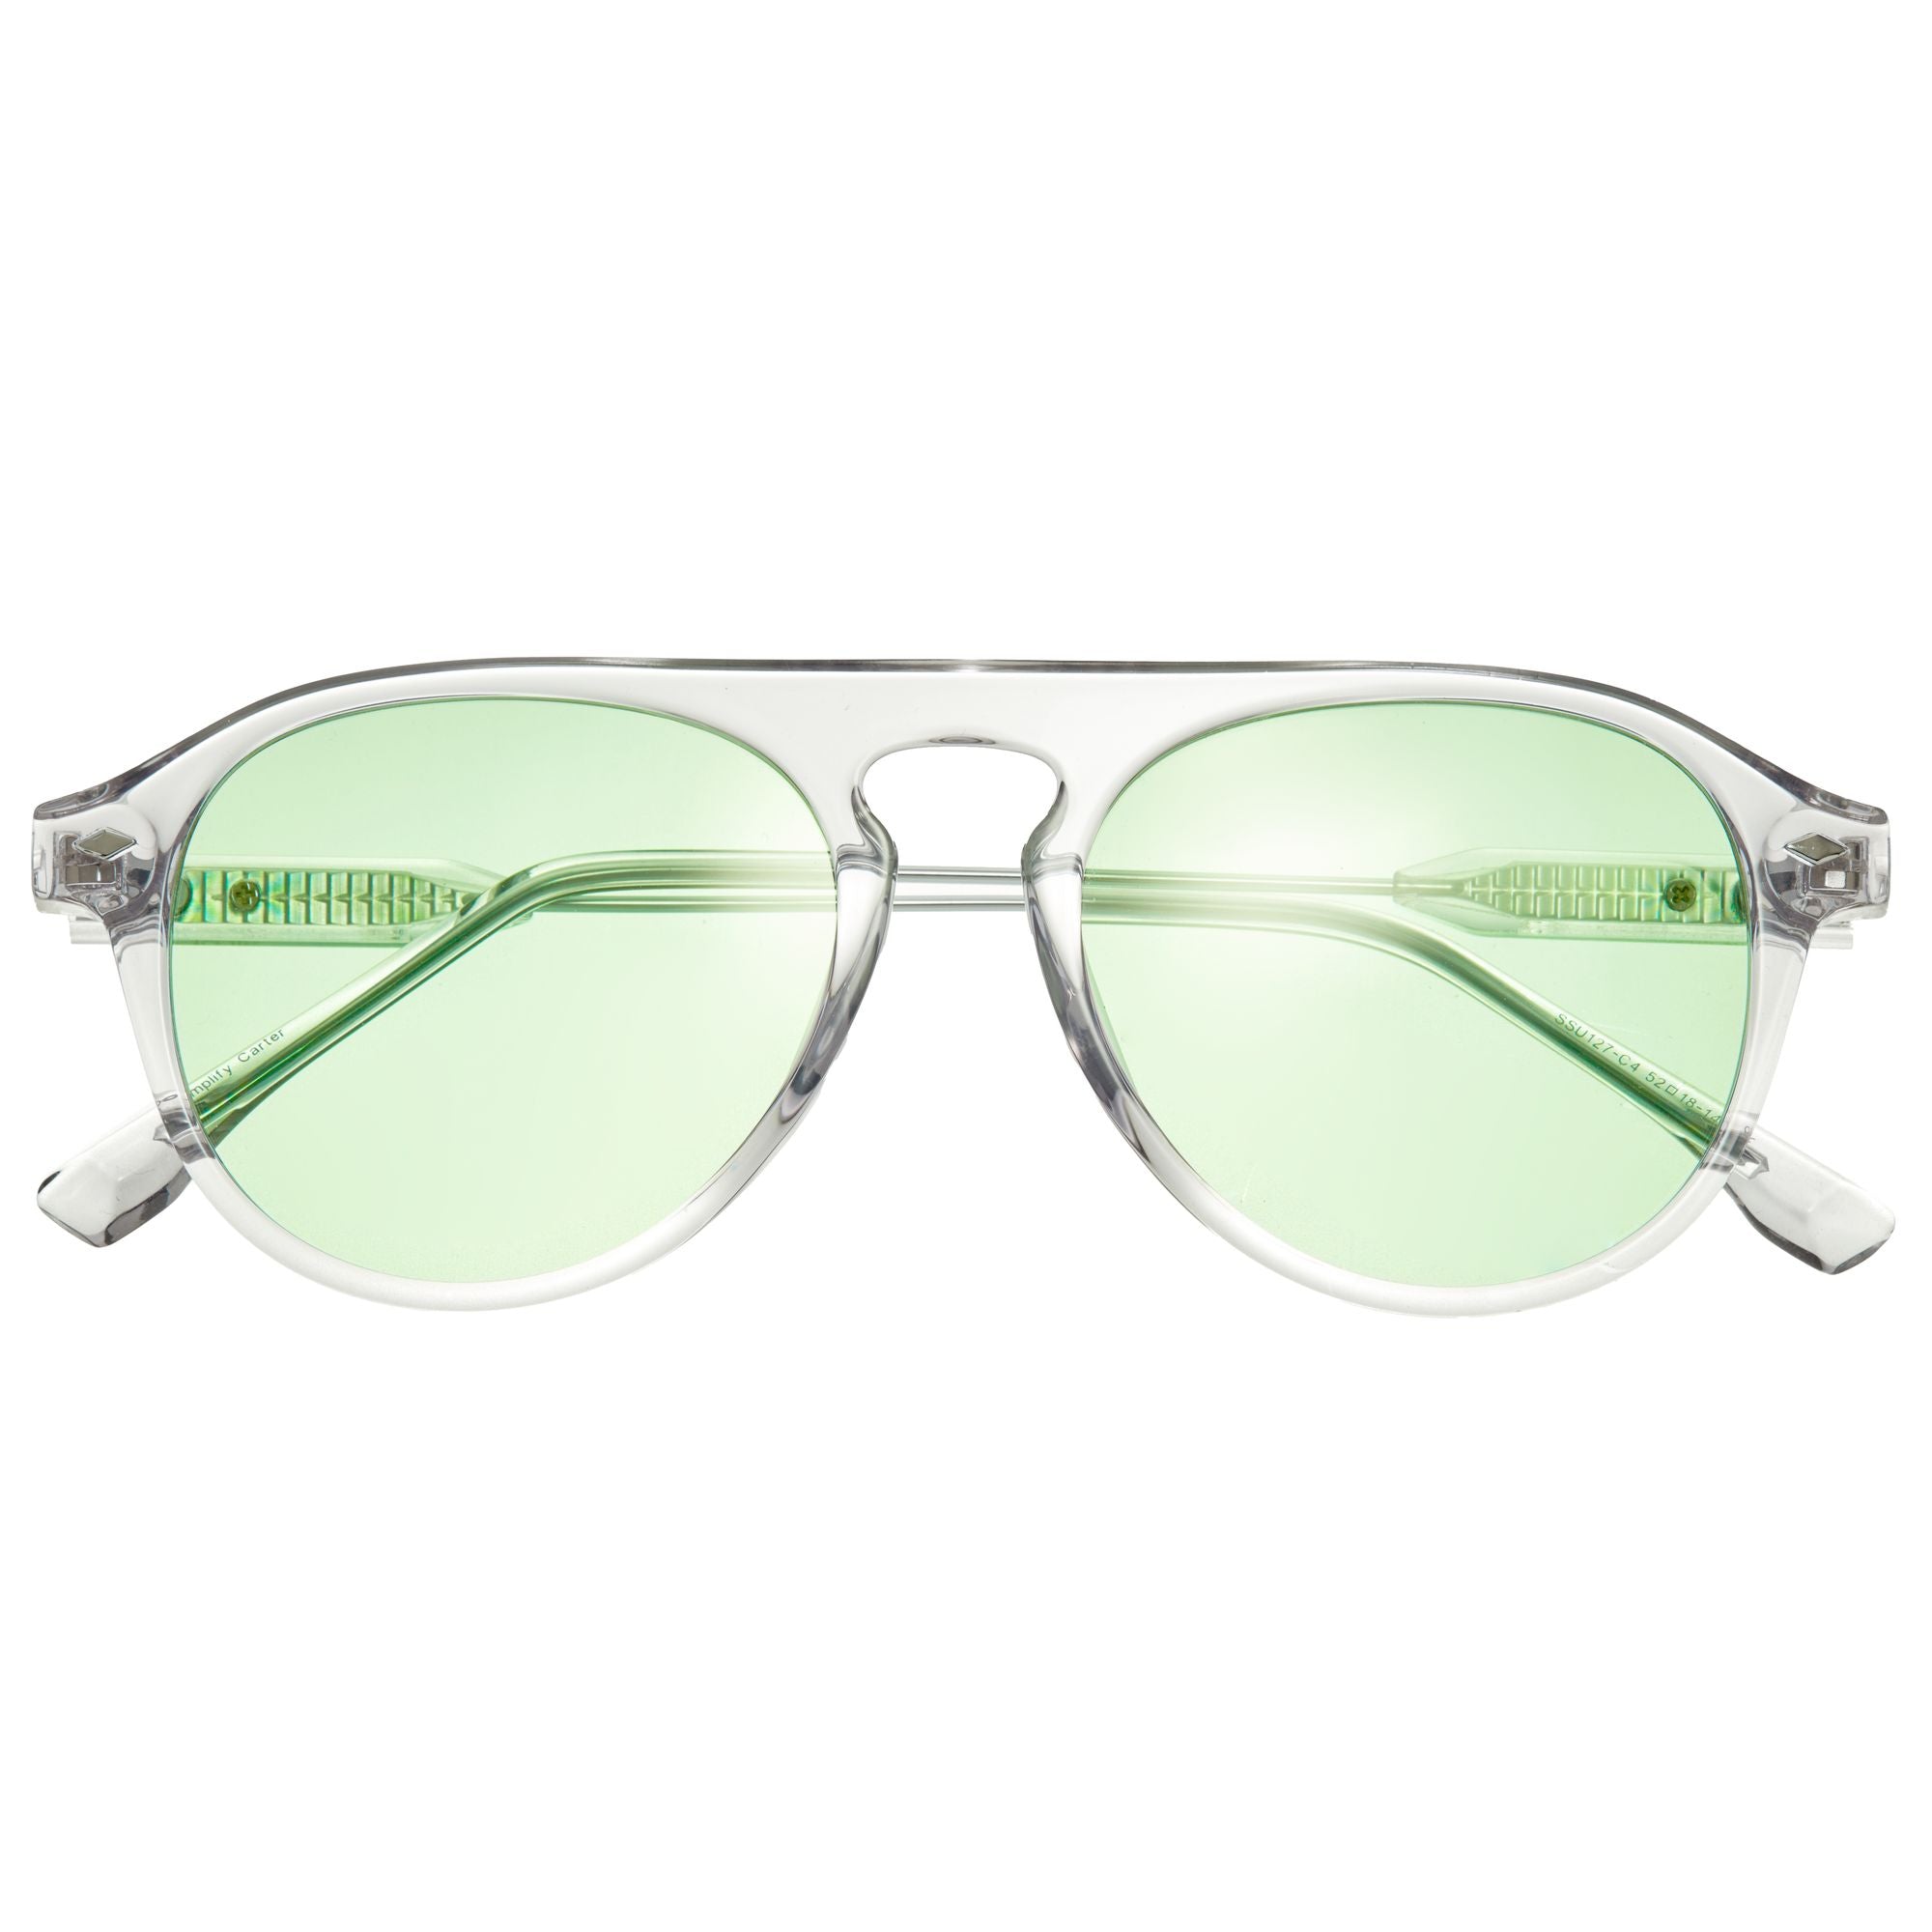 Simplify Carter Polarized Sunglasses - Clear/Green - SSU127-C4